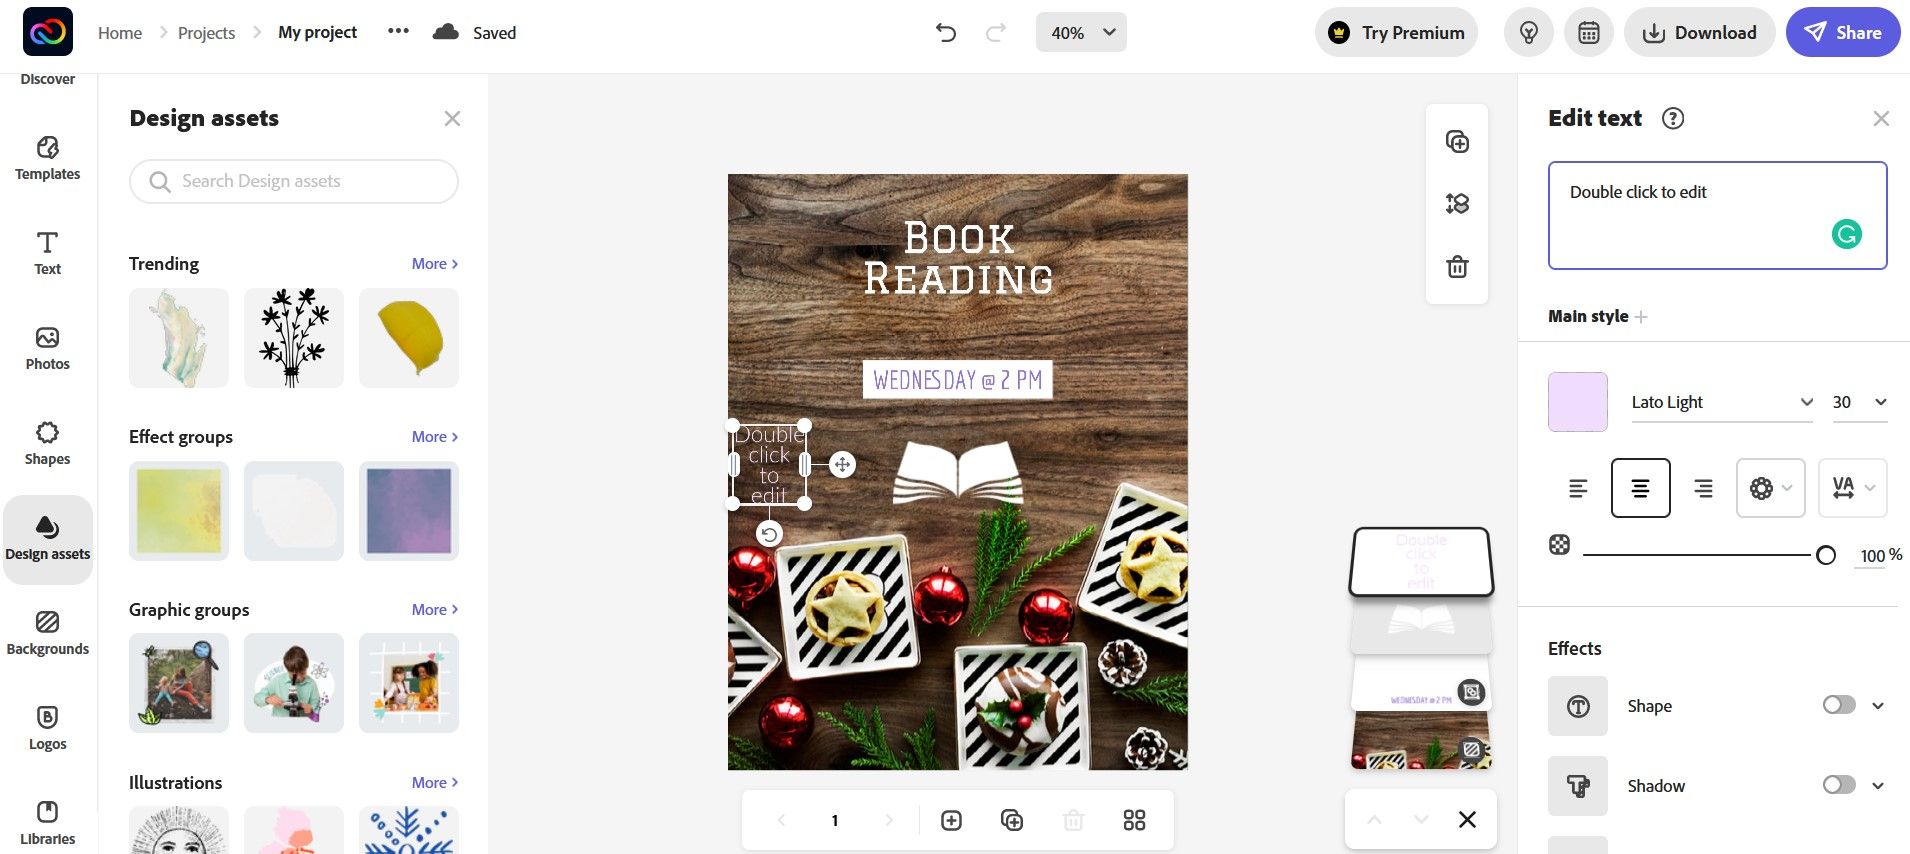 Designing Christmas Book Reading Flyer on Adobe Express App